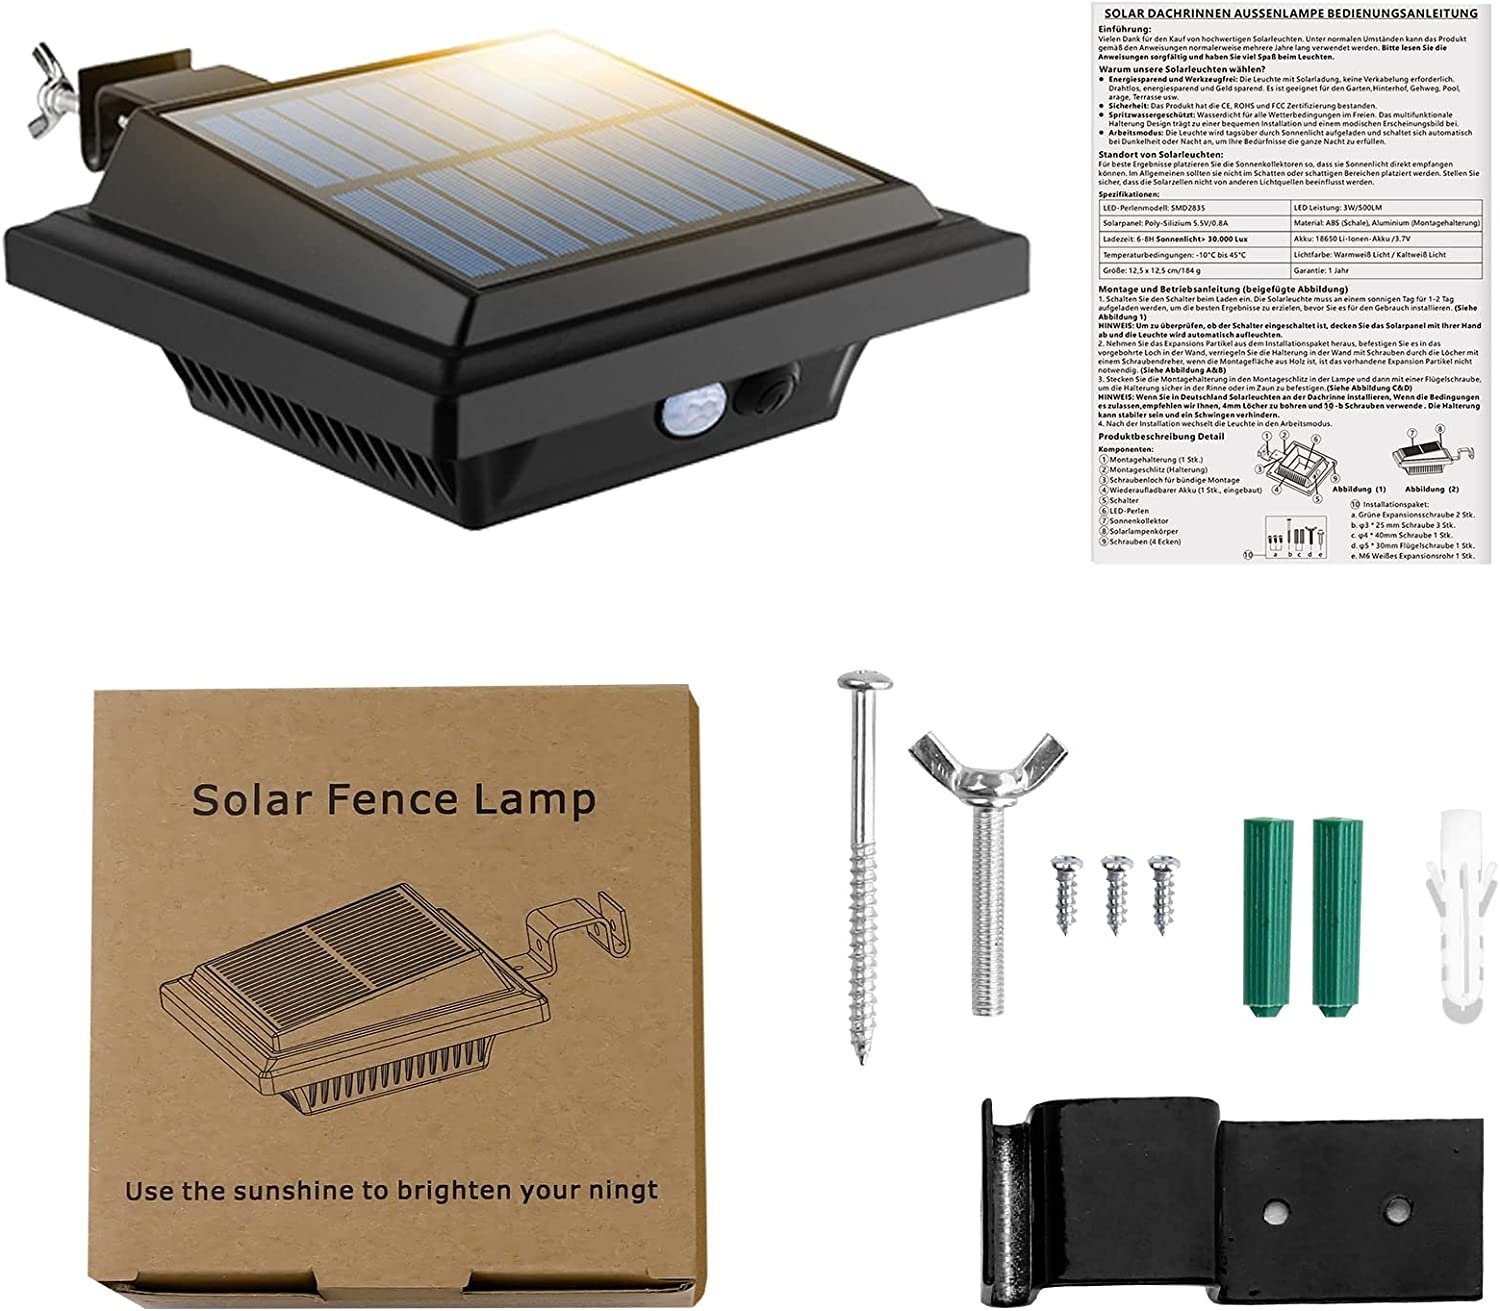 6Stk.40LEDs Bewegungsmelder Solarlampen, LED Home Dachrinnenleuchte safety